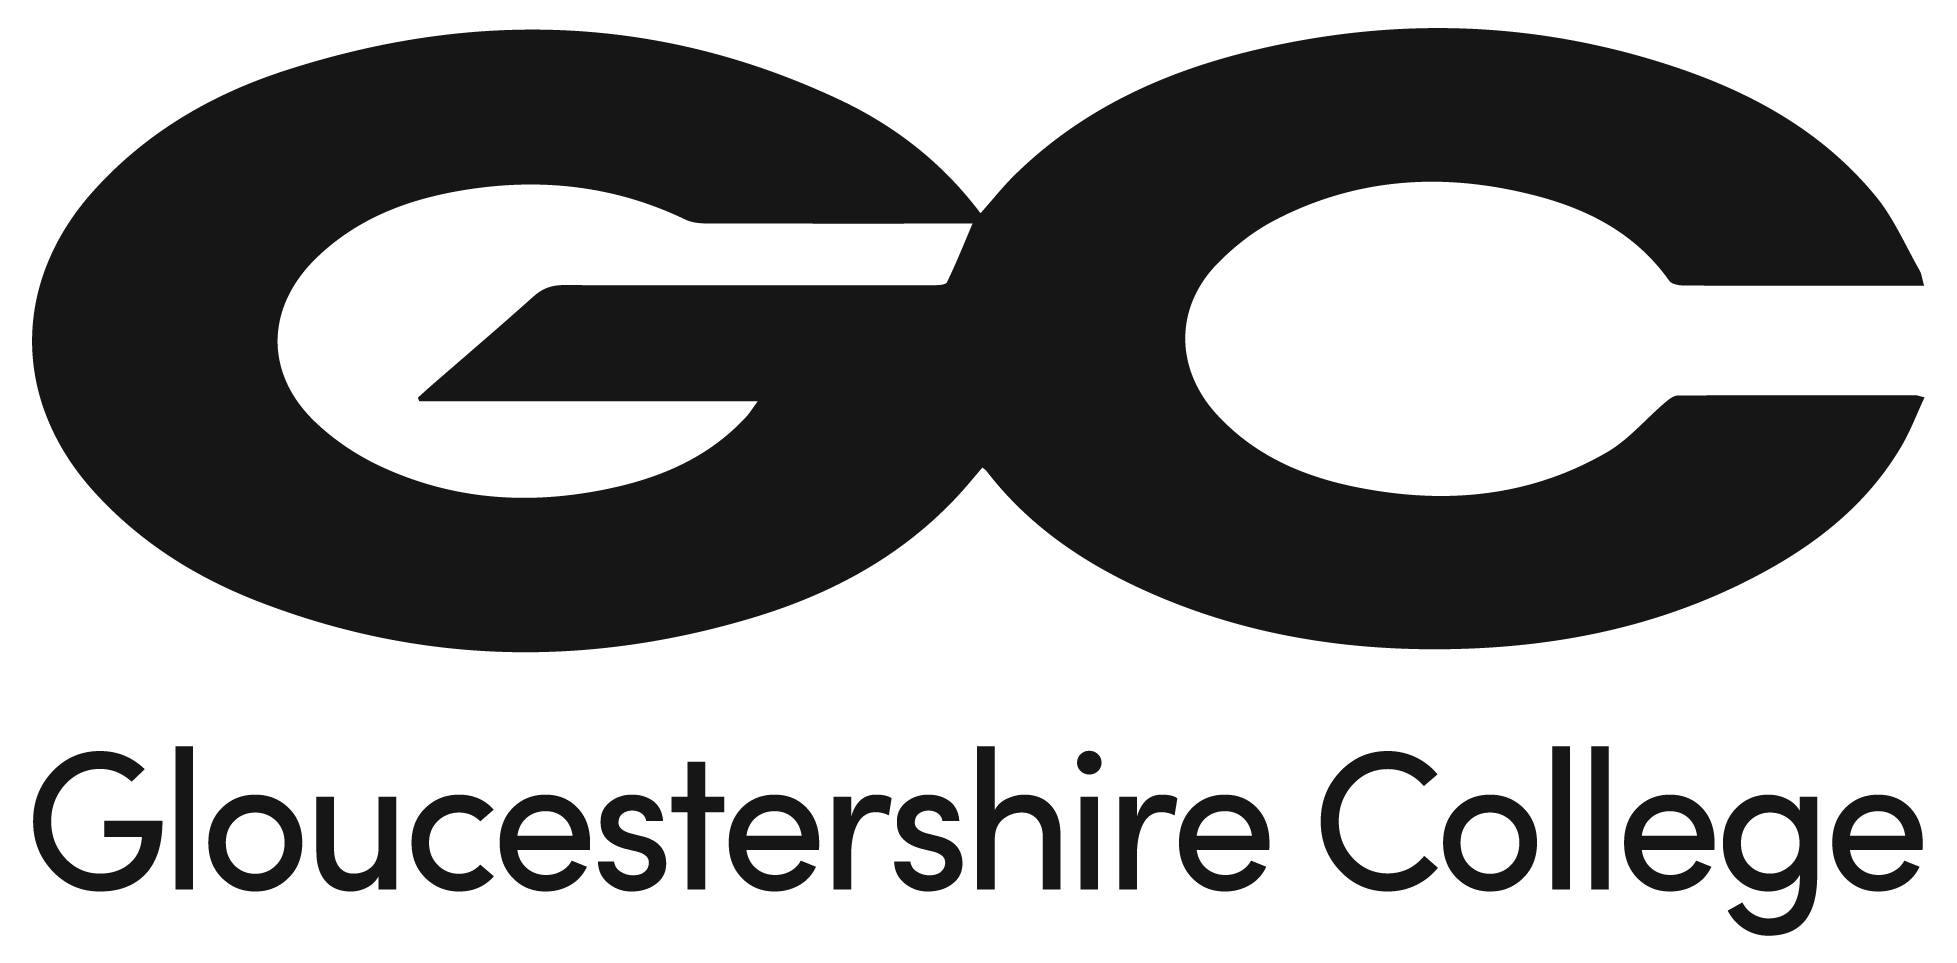 Gloucestershire College Logo